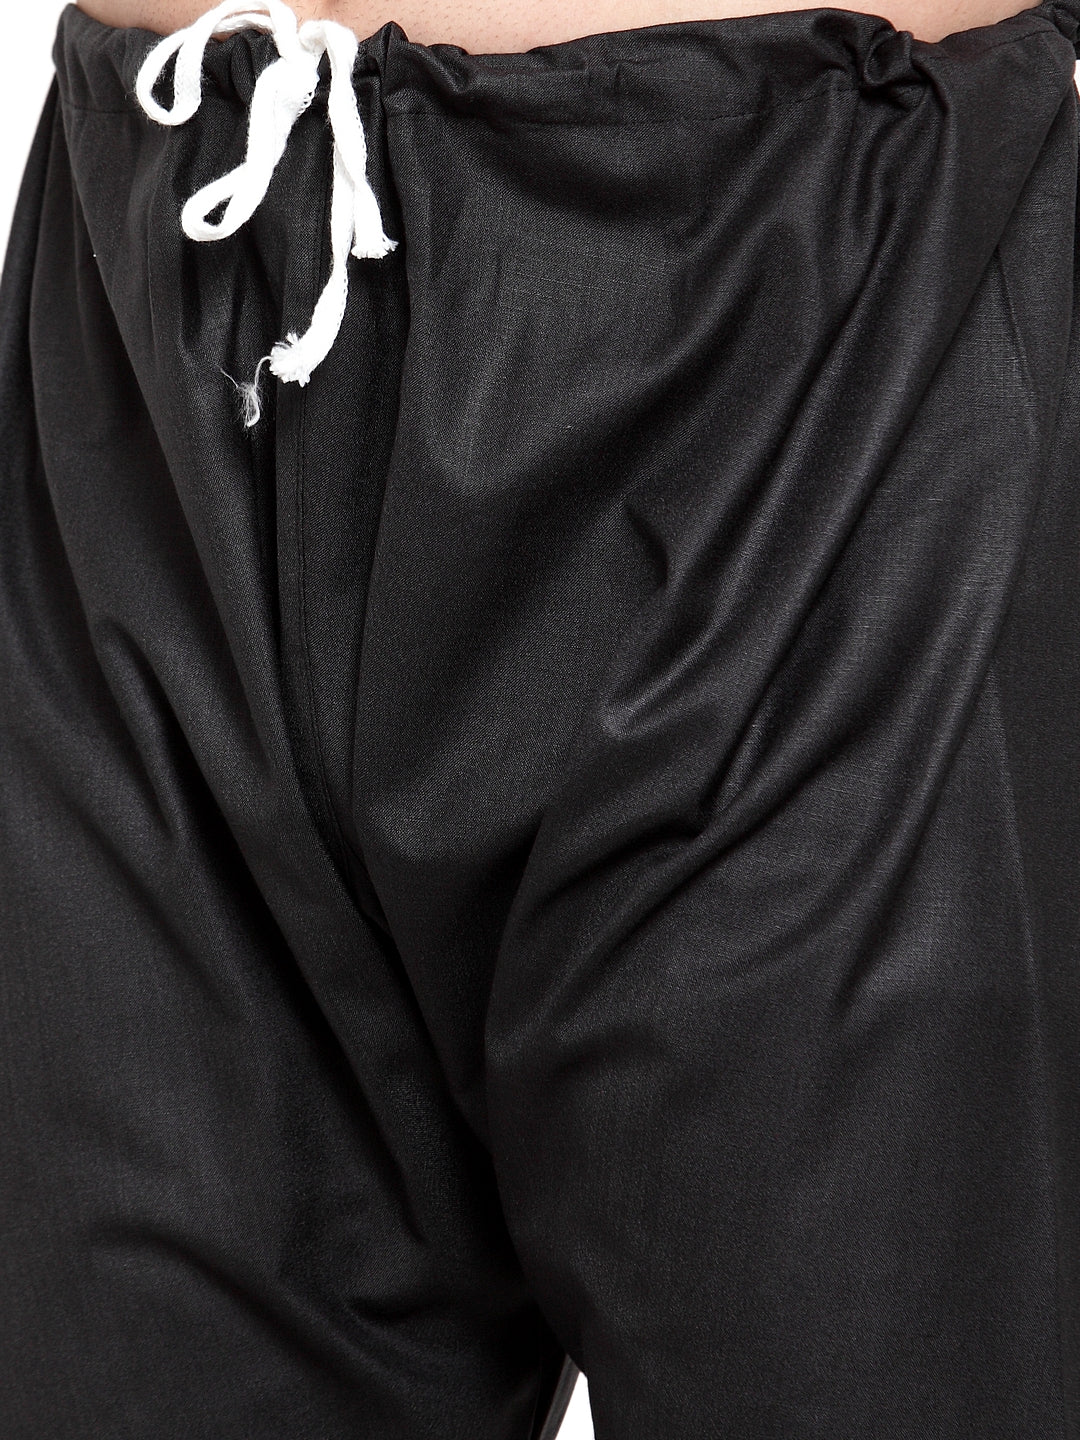 Men's Solid Cotton Kurta Pajama with Printed Waistcoat ( JOKP WC 4061 Blue-B ) - Virat Fashions